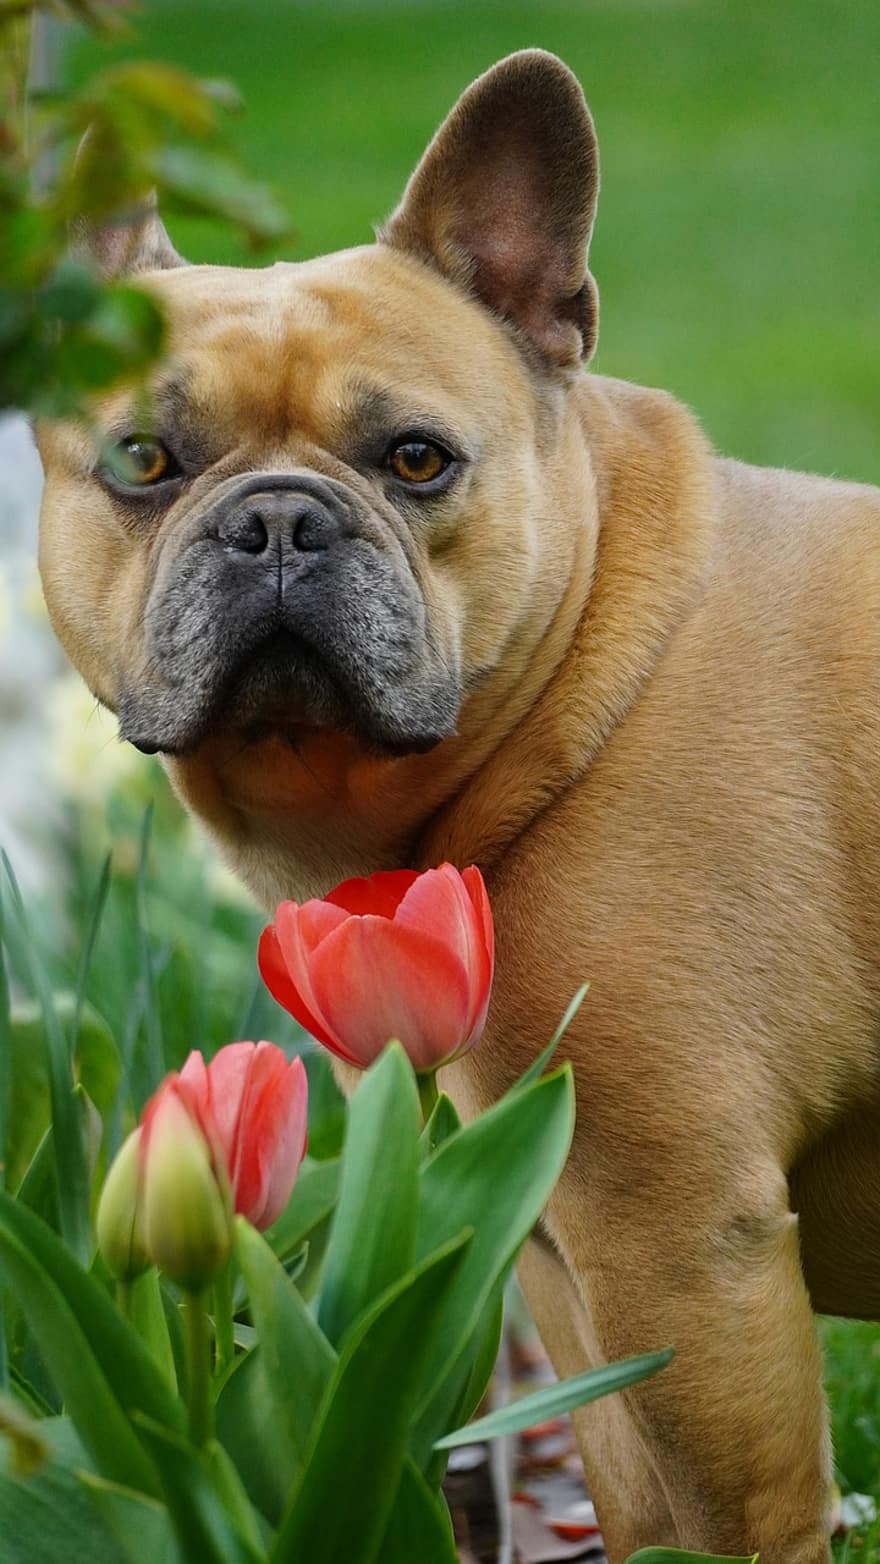 Französische Bulldogge, Garten, Tulpen, Hund, Frühling, Haustier, Tier, Natur, Landschaft, Hinterhof, Haustiere